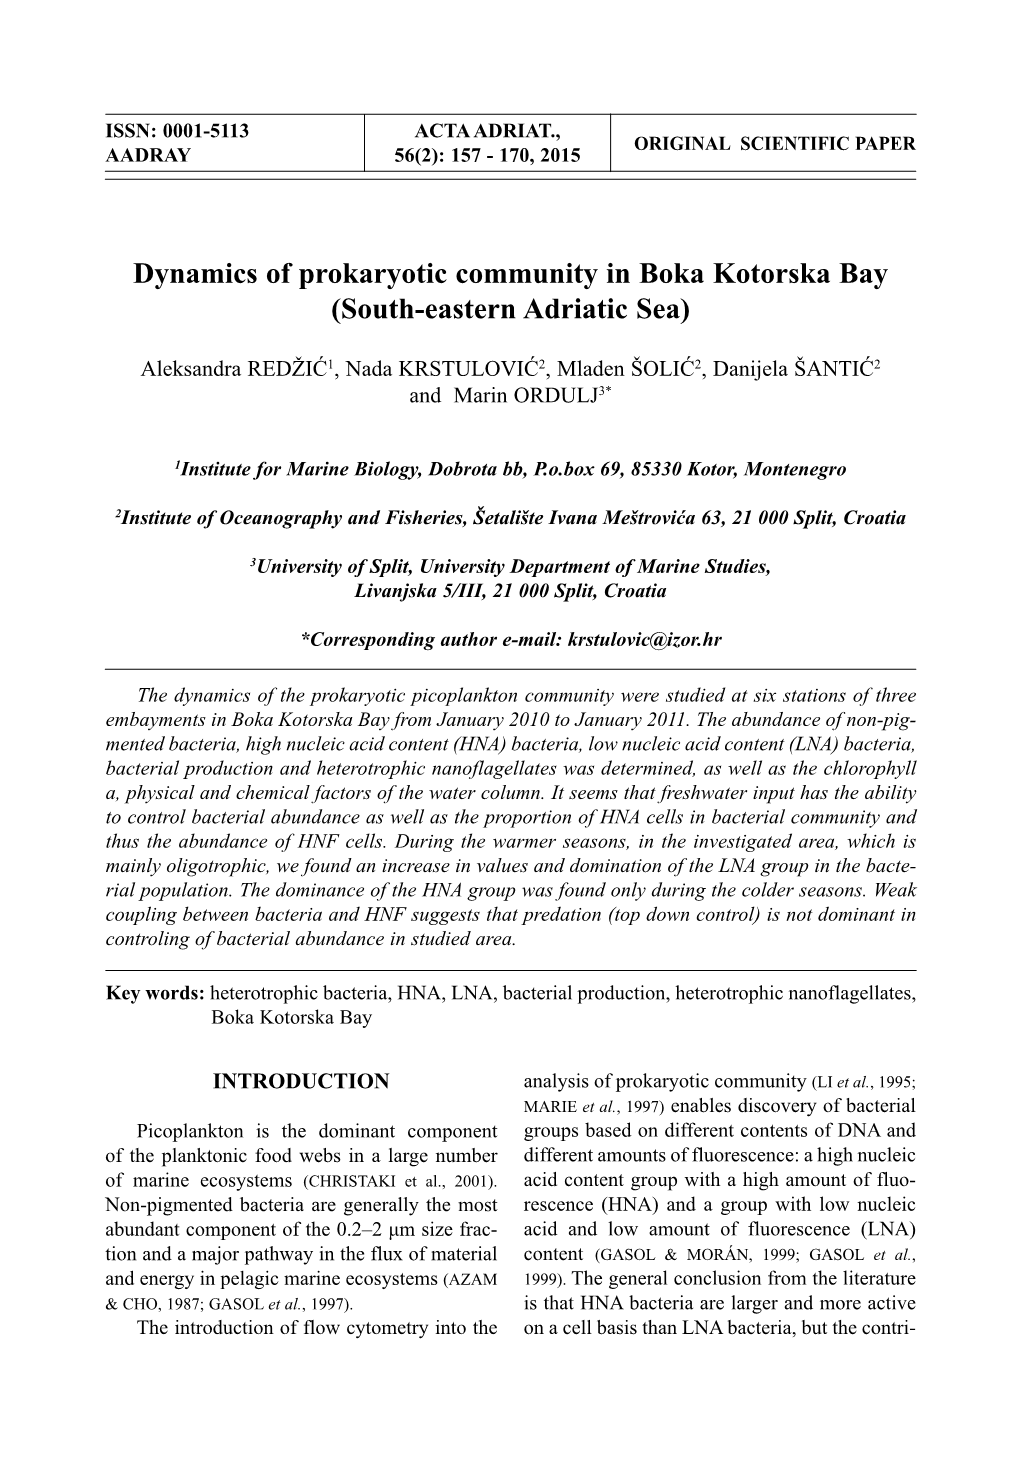 Dynamics of Prokaryotic Community in Boka Kotorska Bay (South-Eastern Adriatic Sea)